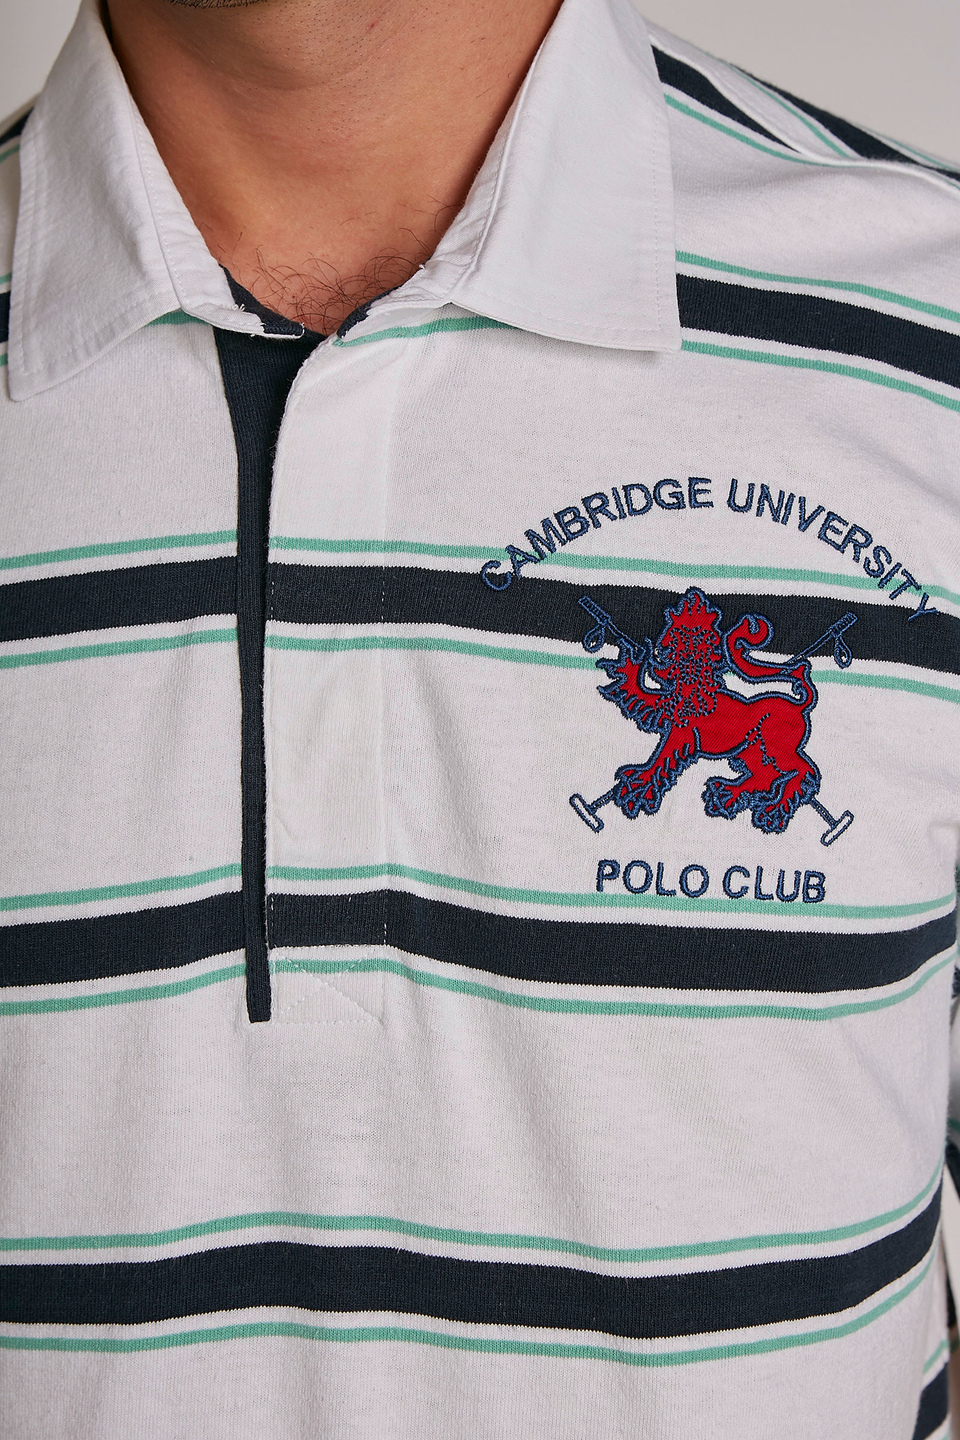 Herren-Poloshirt mit kurzen Ärmeln aus 100 % Baumwolle im Regular Fit - La Martina - Official Online Shop